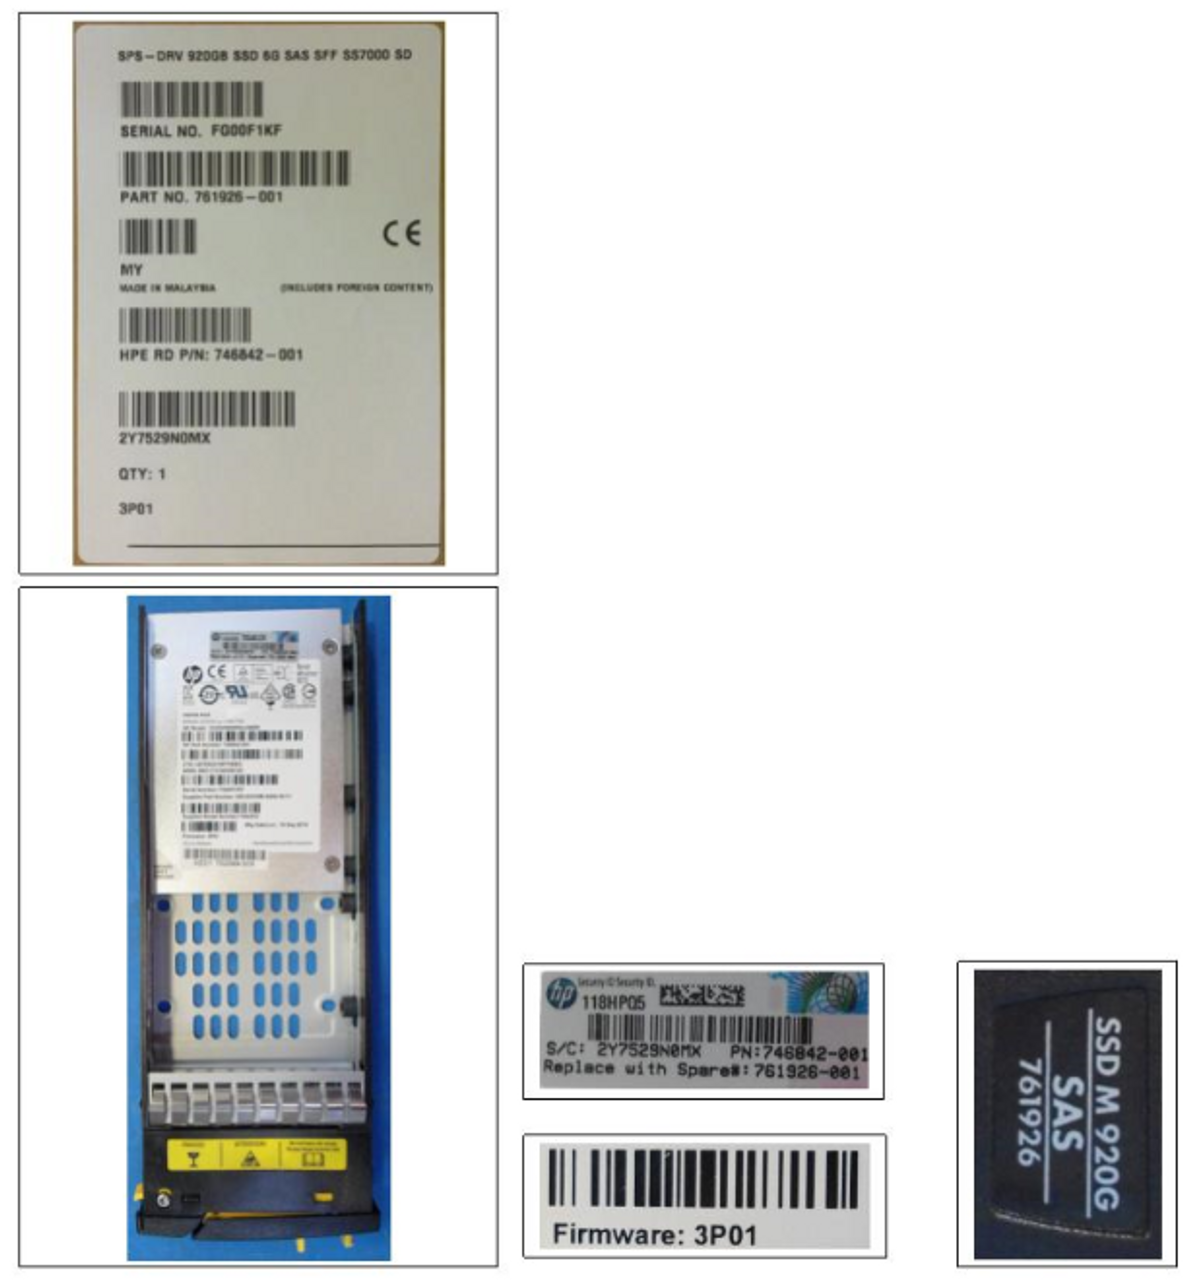 SPS-DRV 920GB SSD SAS SFF SS7000 SD - 761926-001